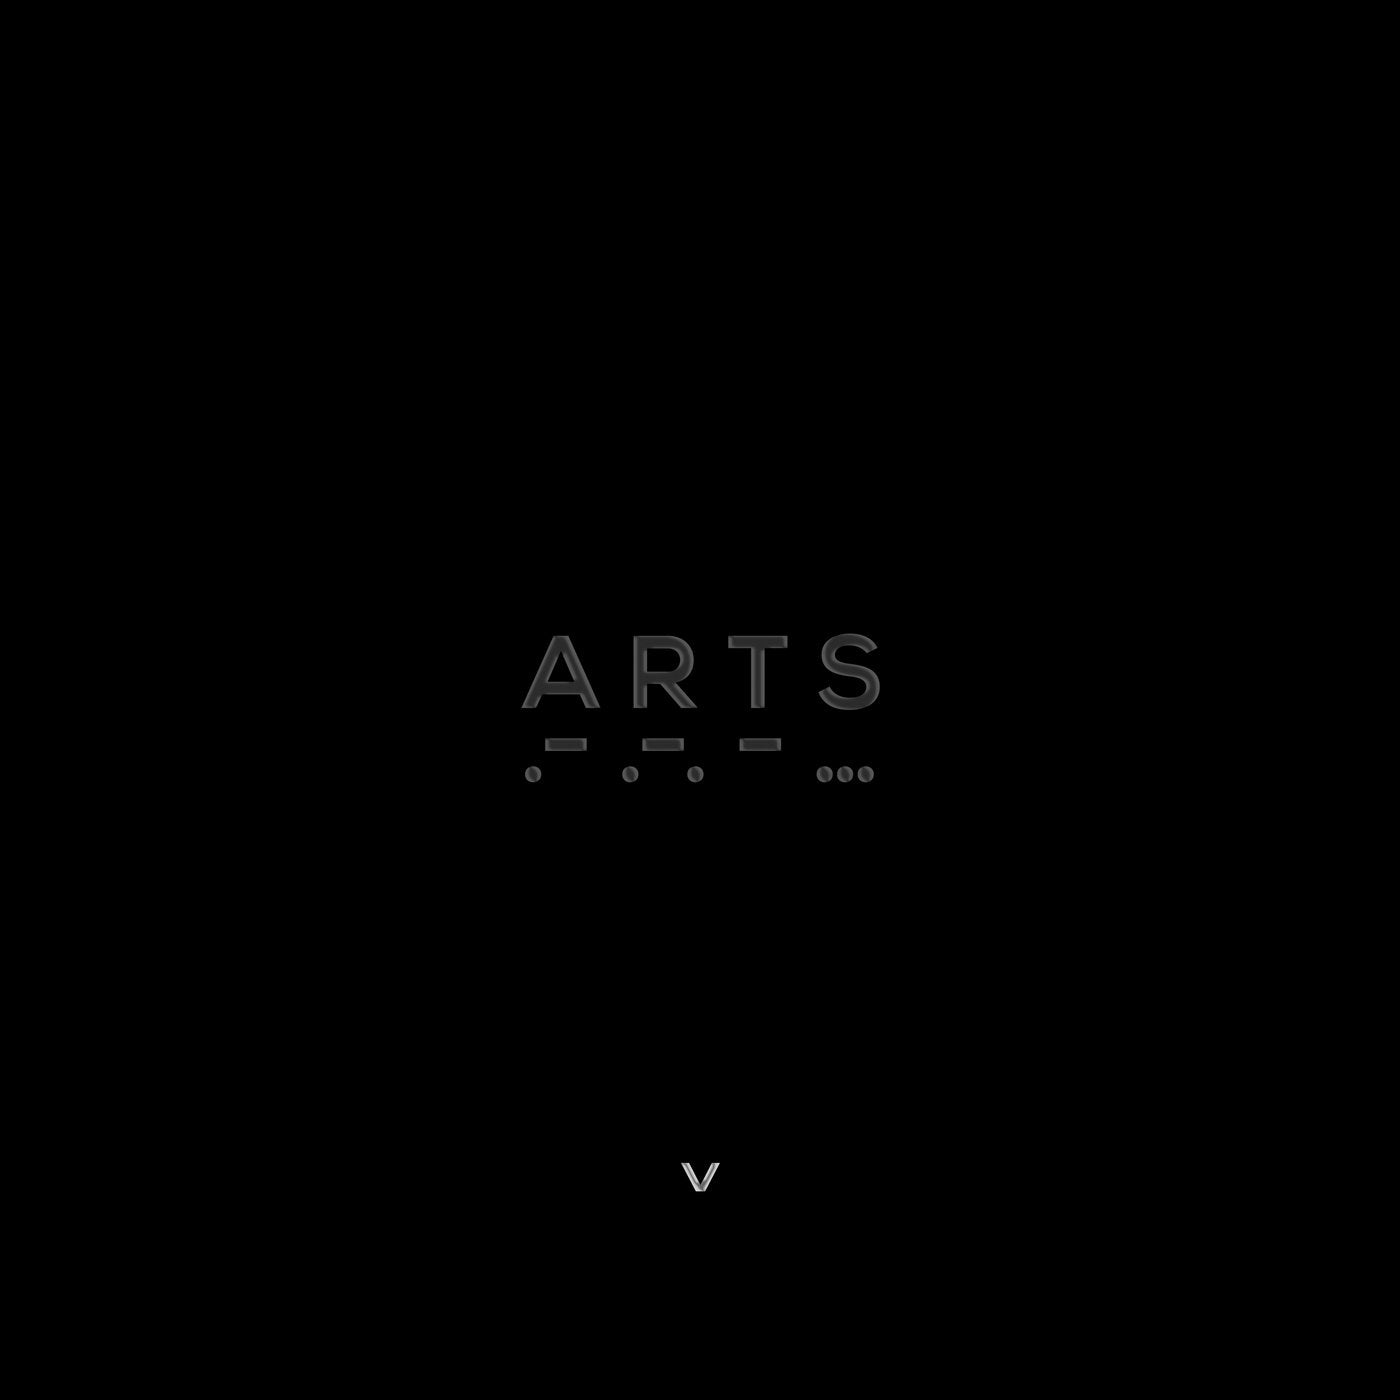 ARTS V - Five years of Arts